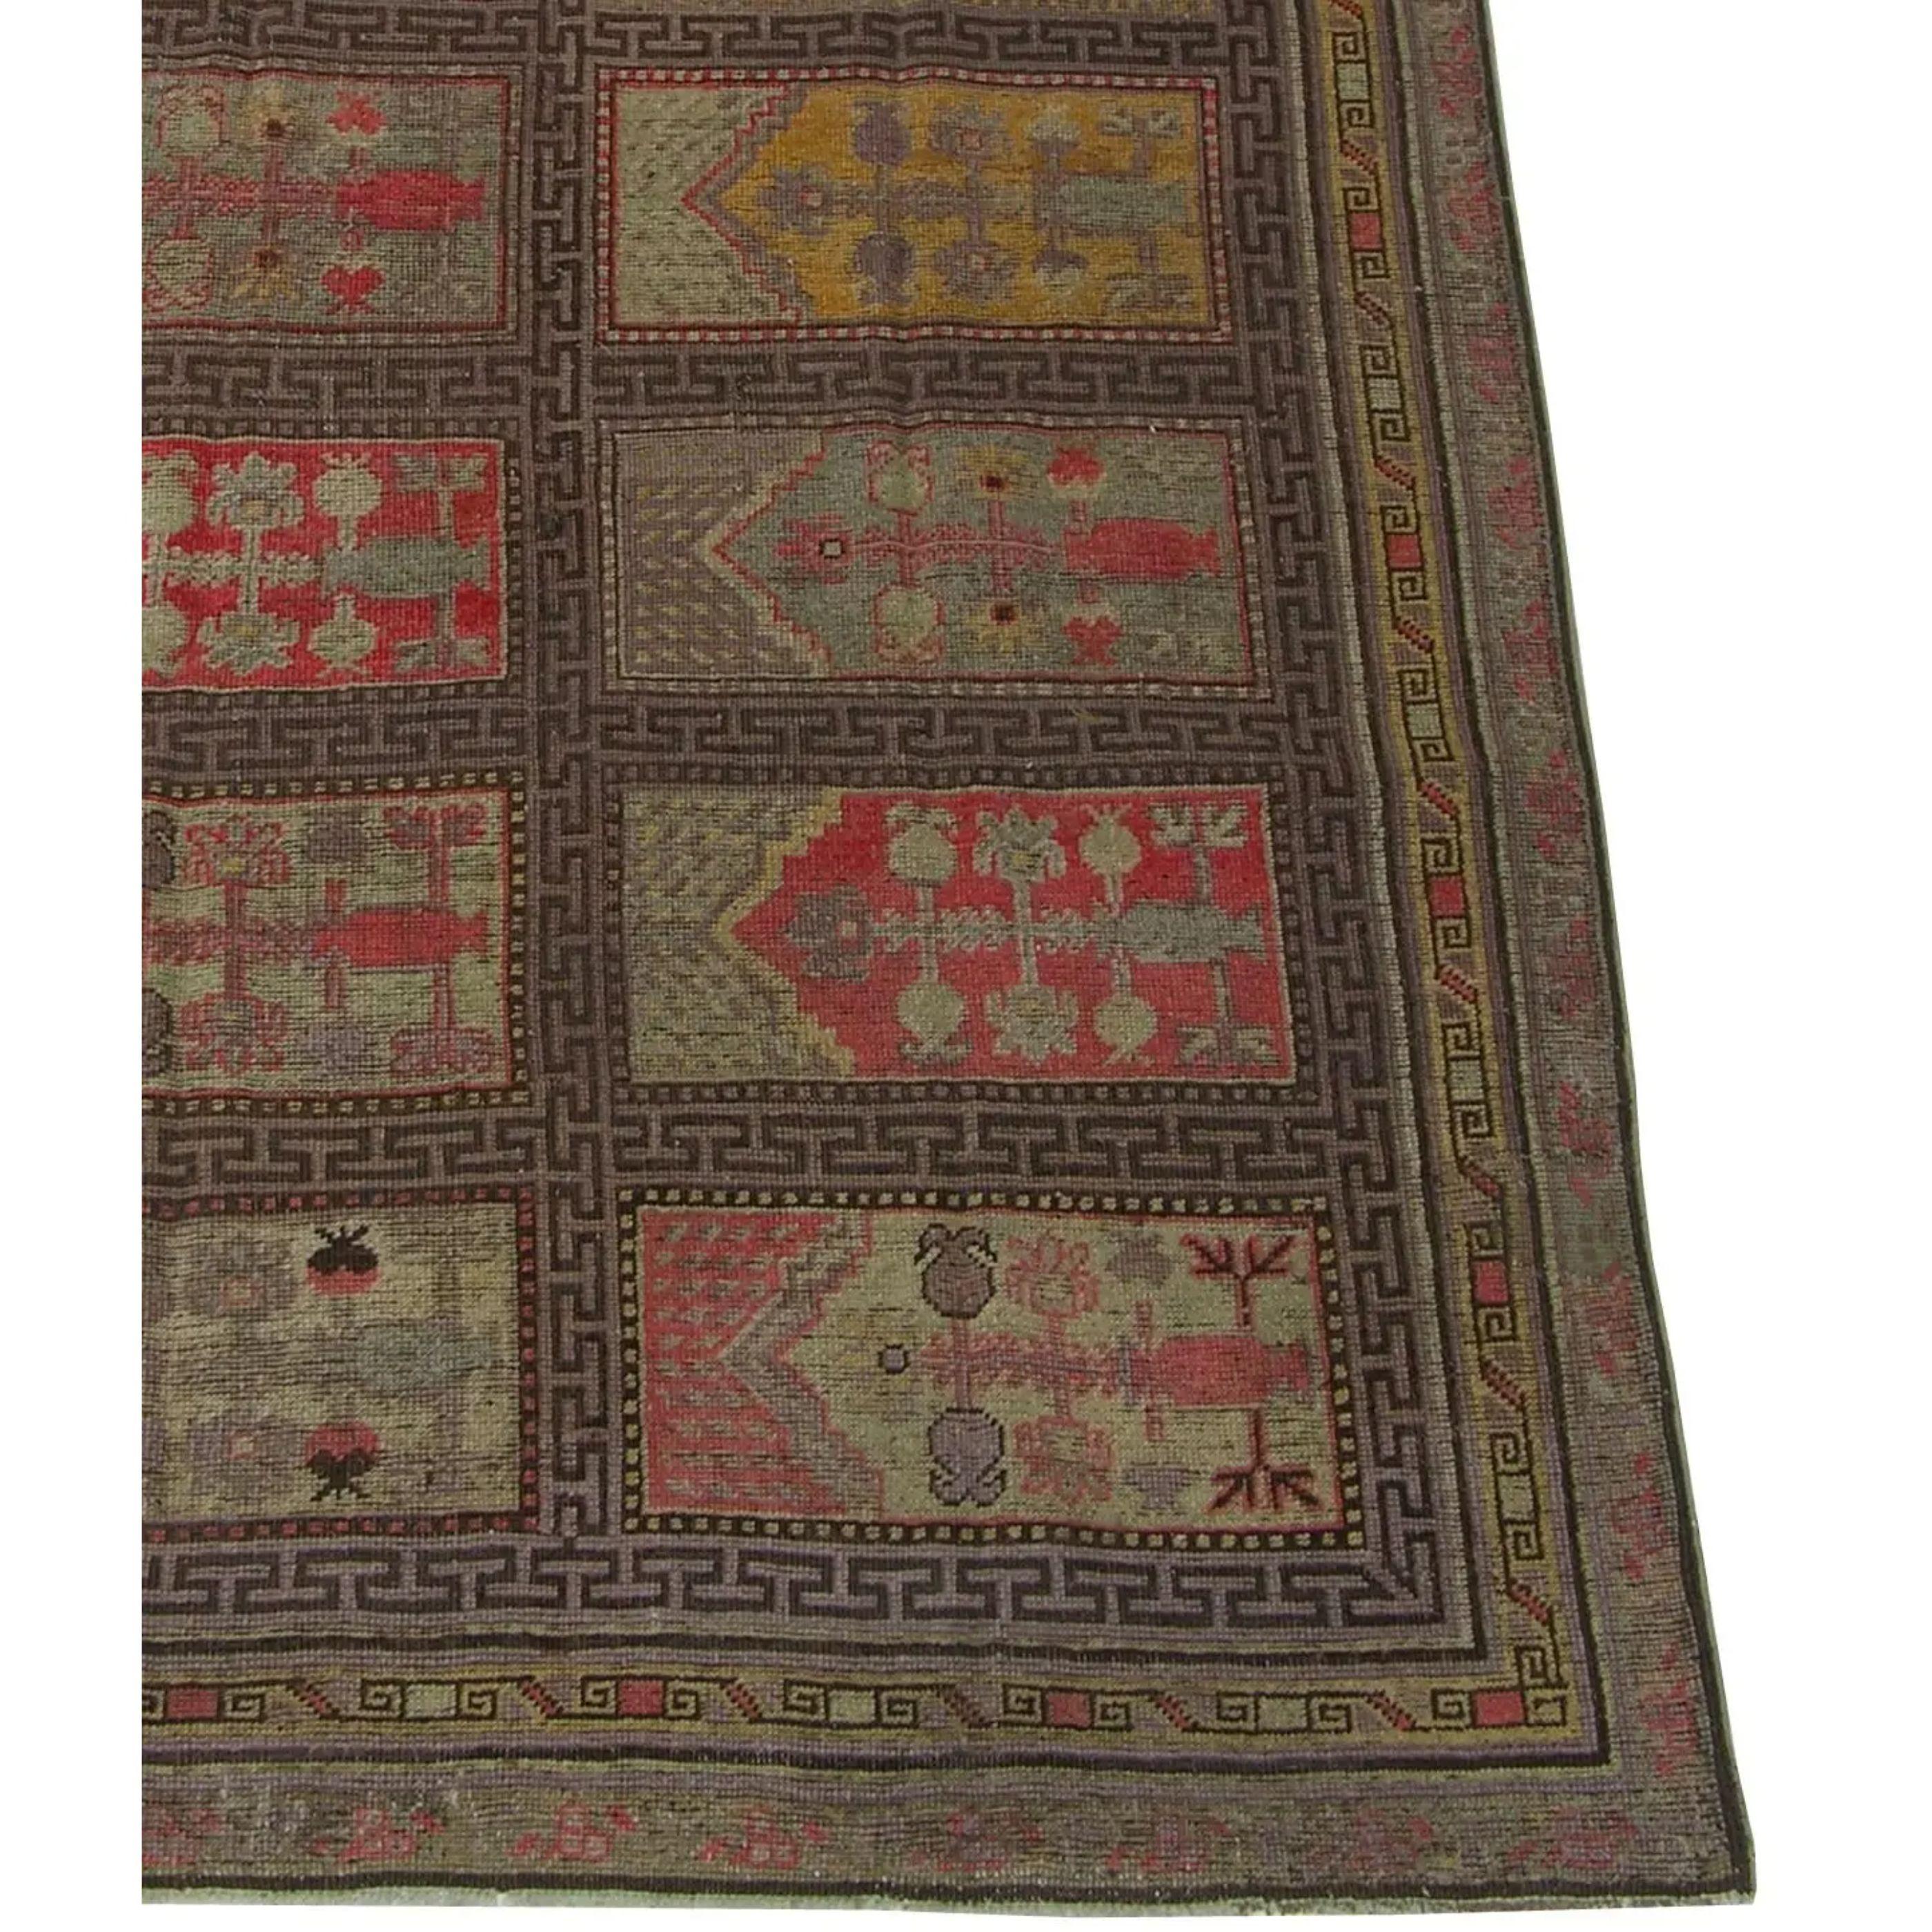 Circa 1900 Antique Khotan Samarkand Rug. This rug is a traditional style rug.